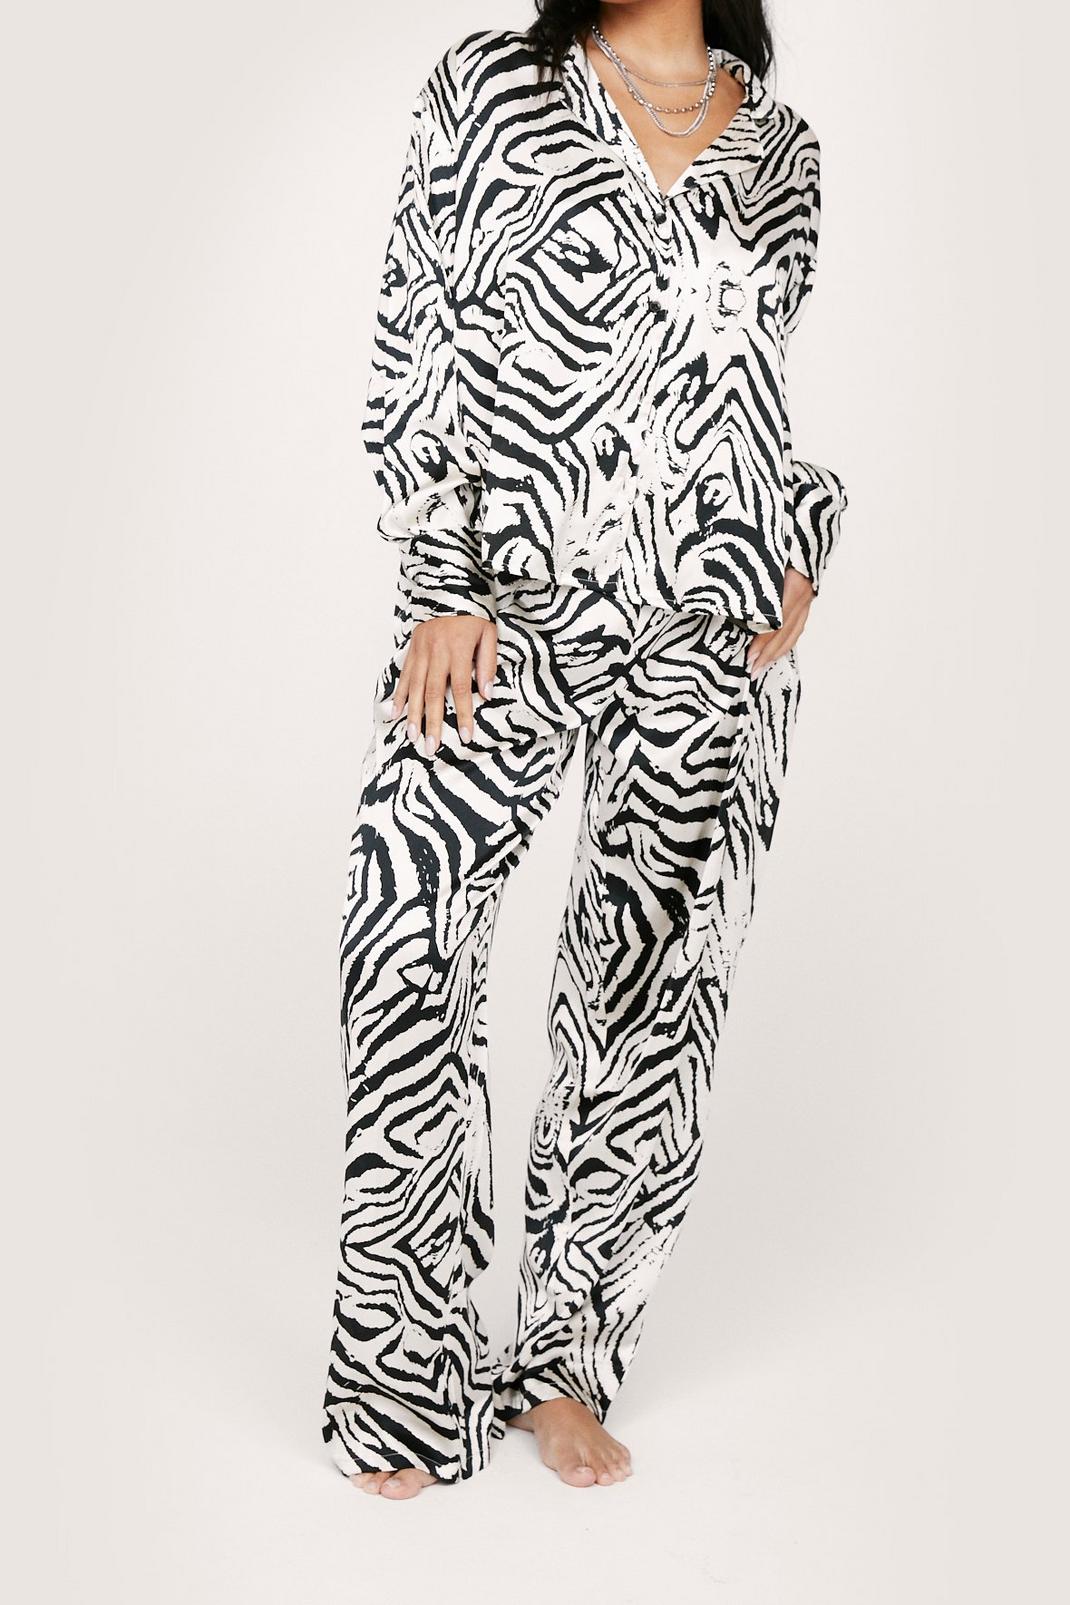 Satin Zebra Oversized Shirt and Pants Pajama Set | Nasty Gal